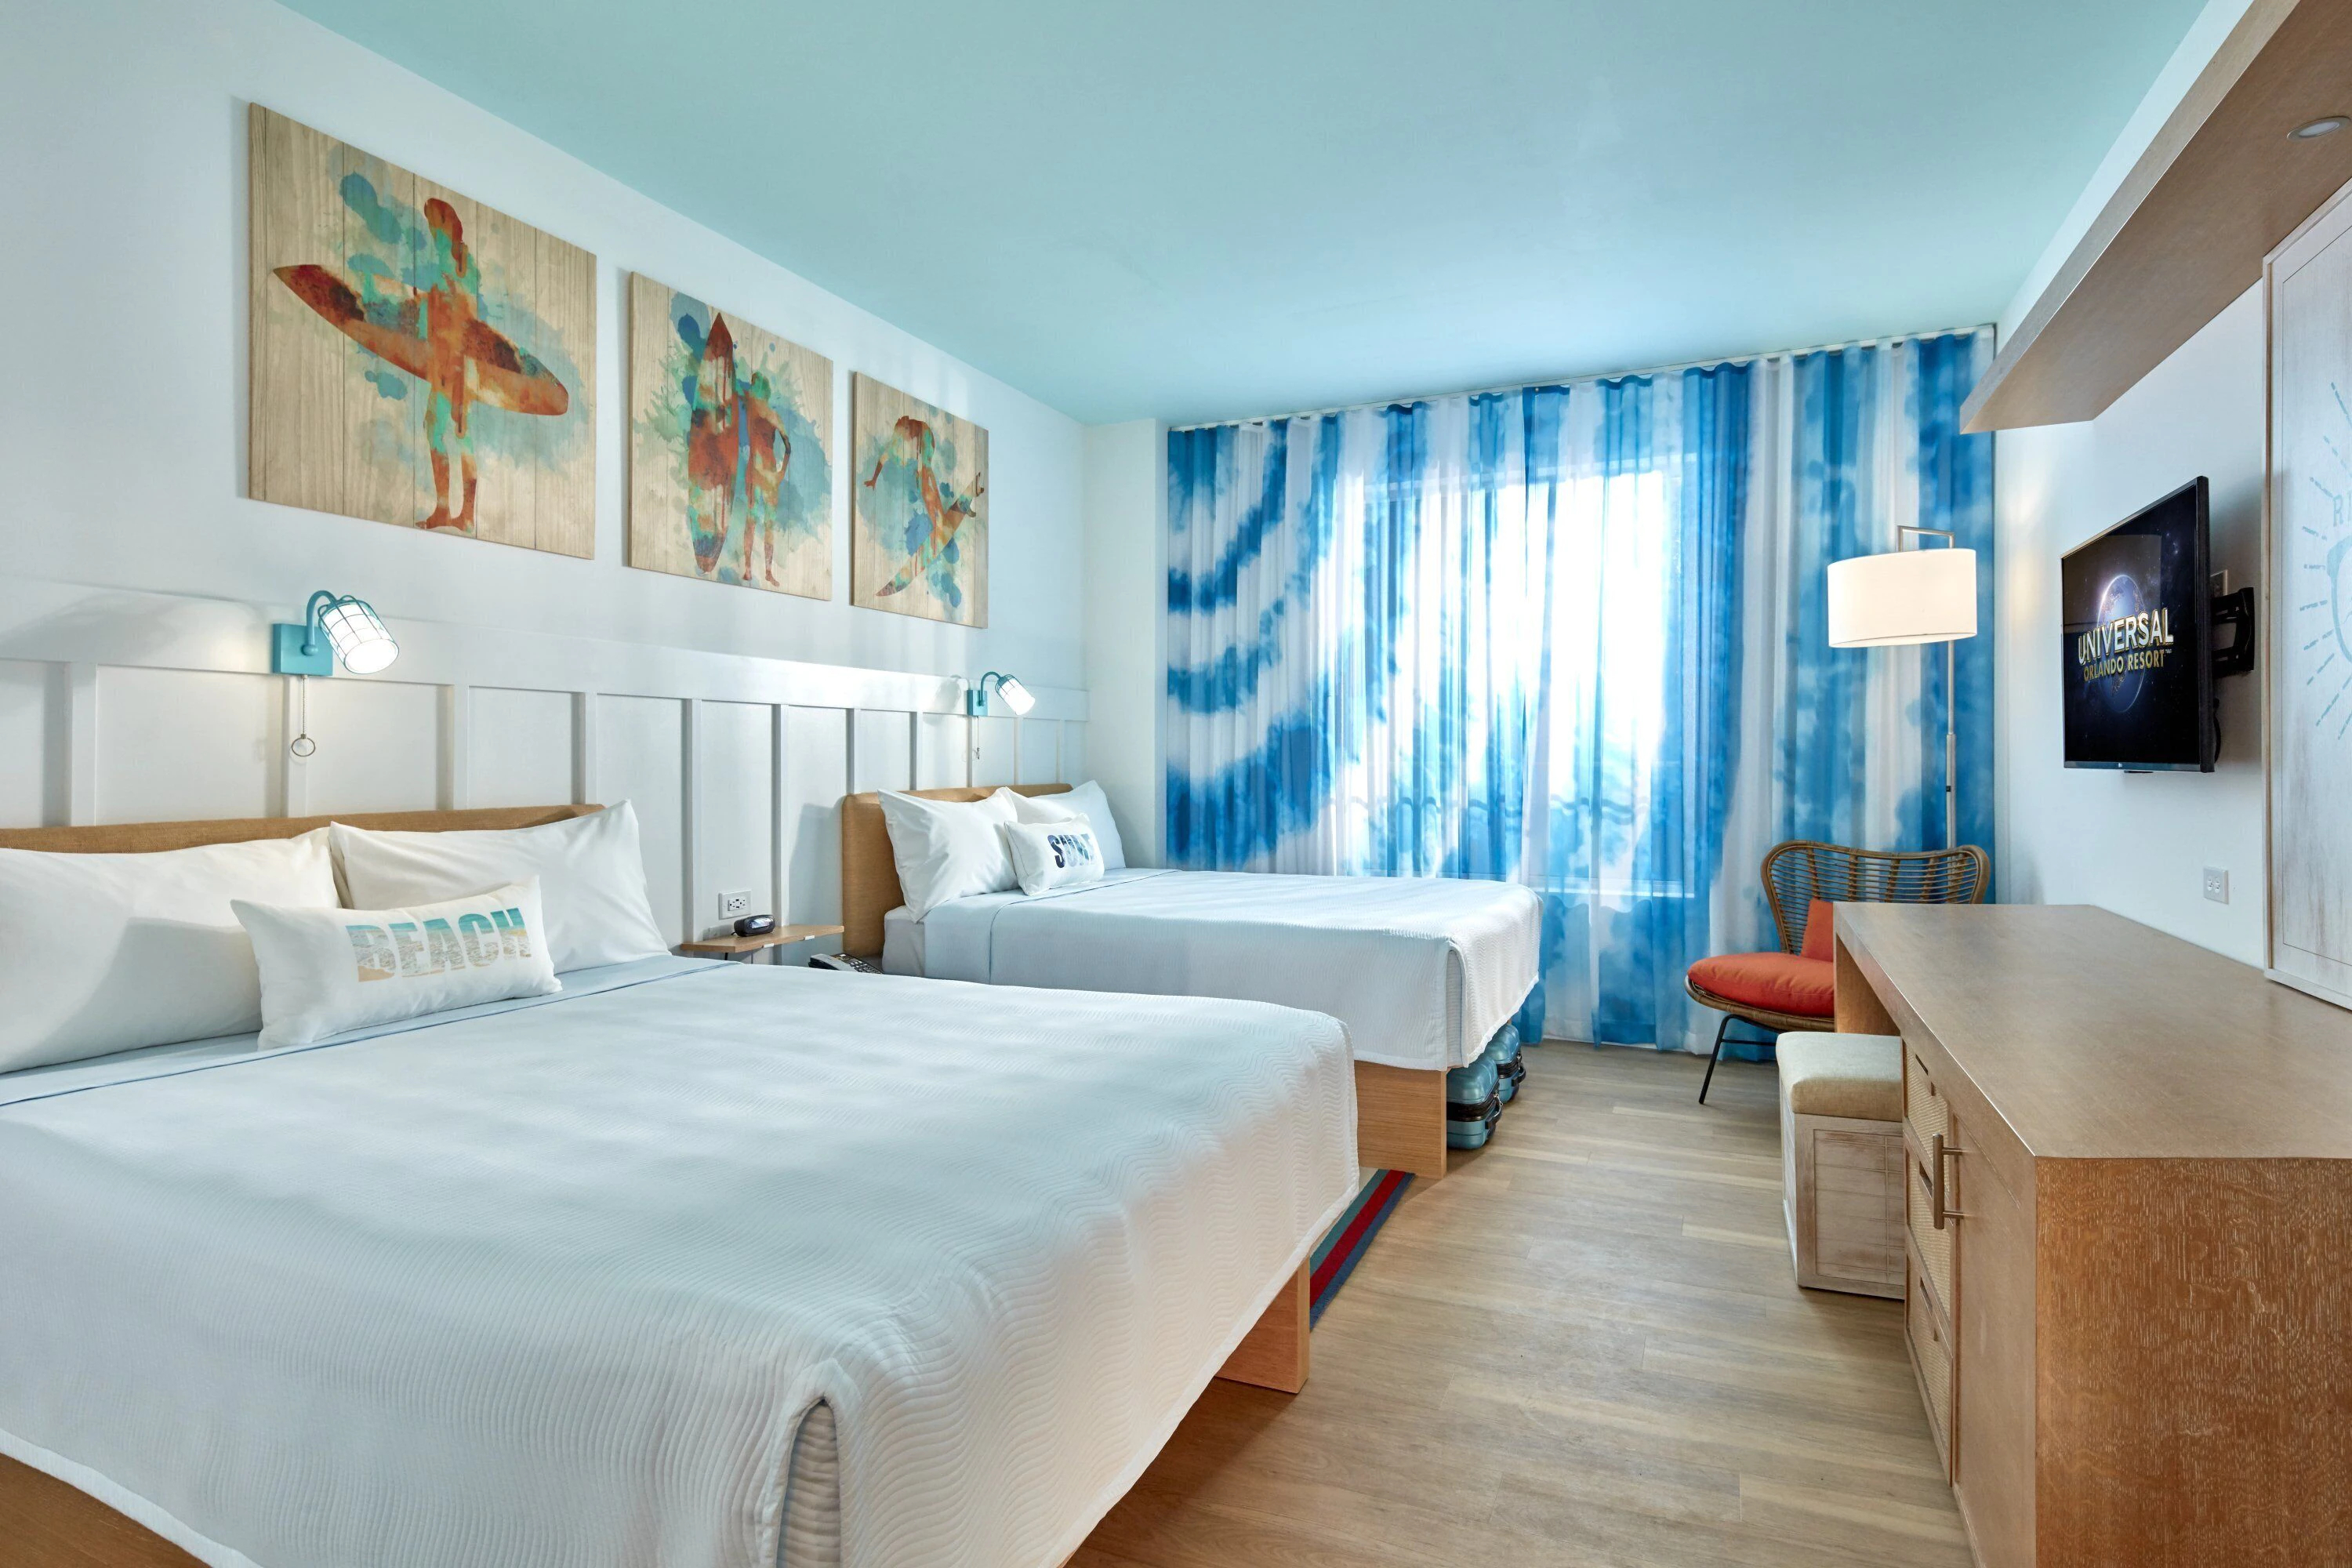 Universal’s Endless Summer Resort - Surfside Inn and Suites